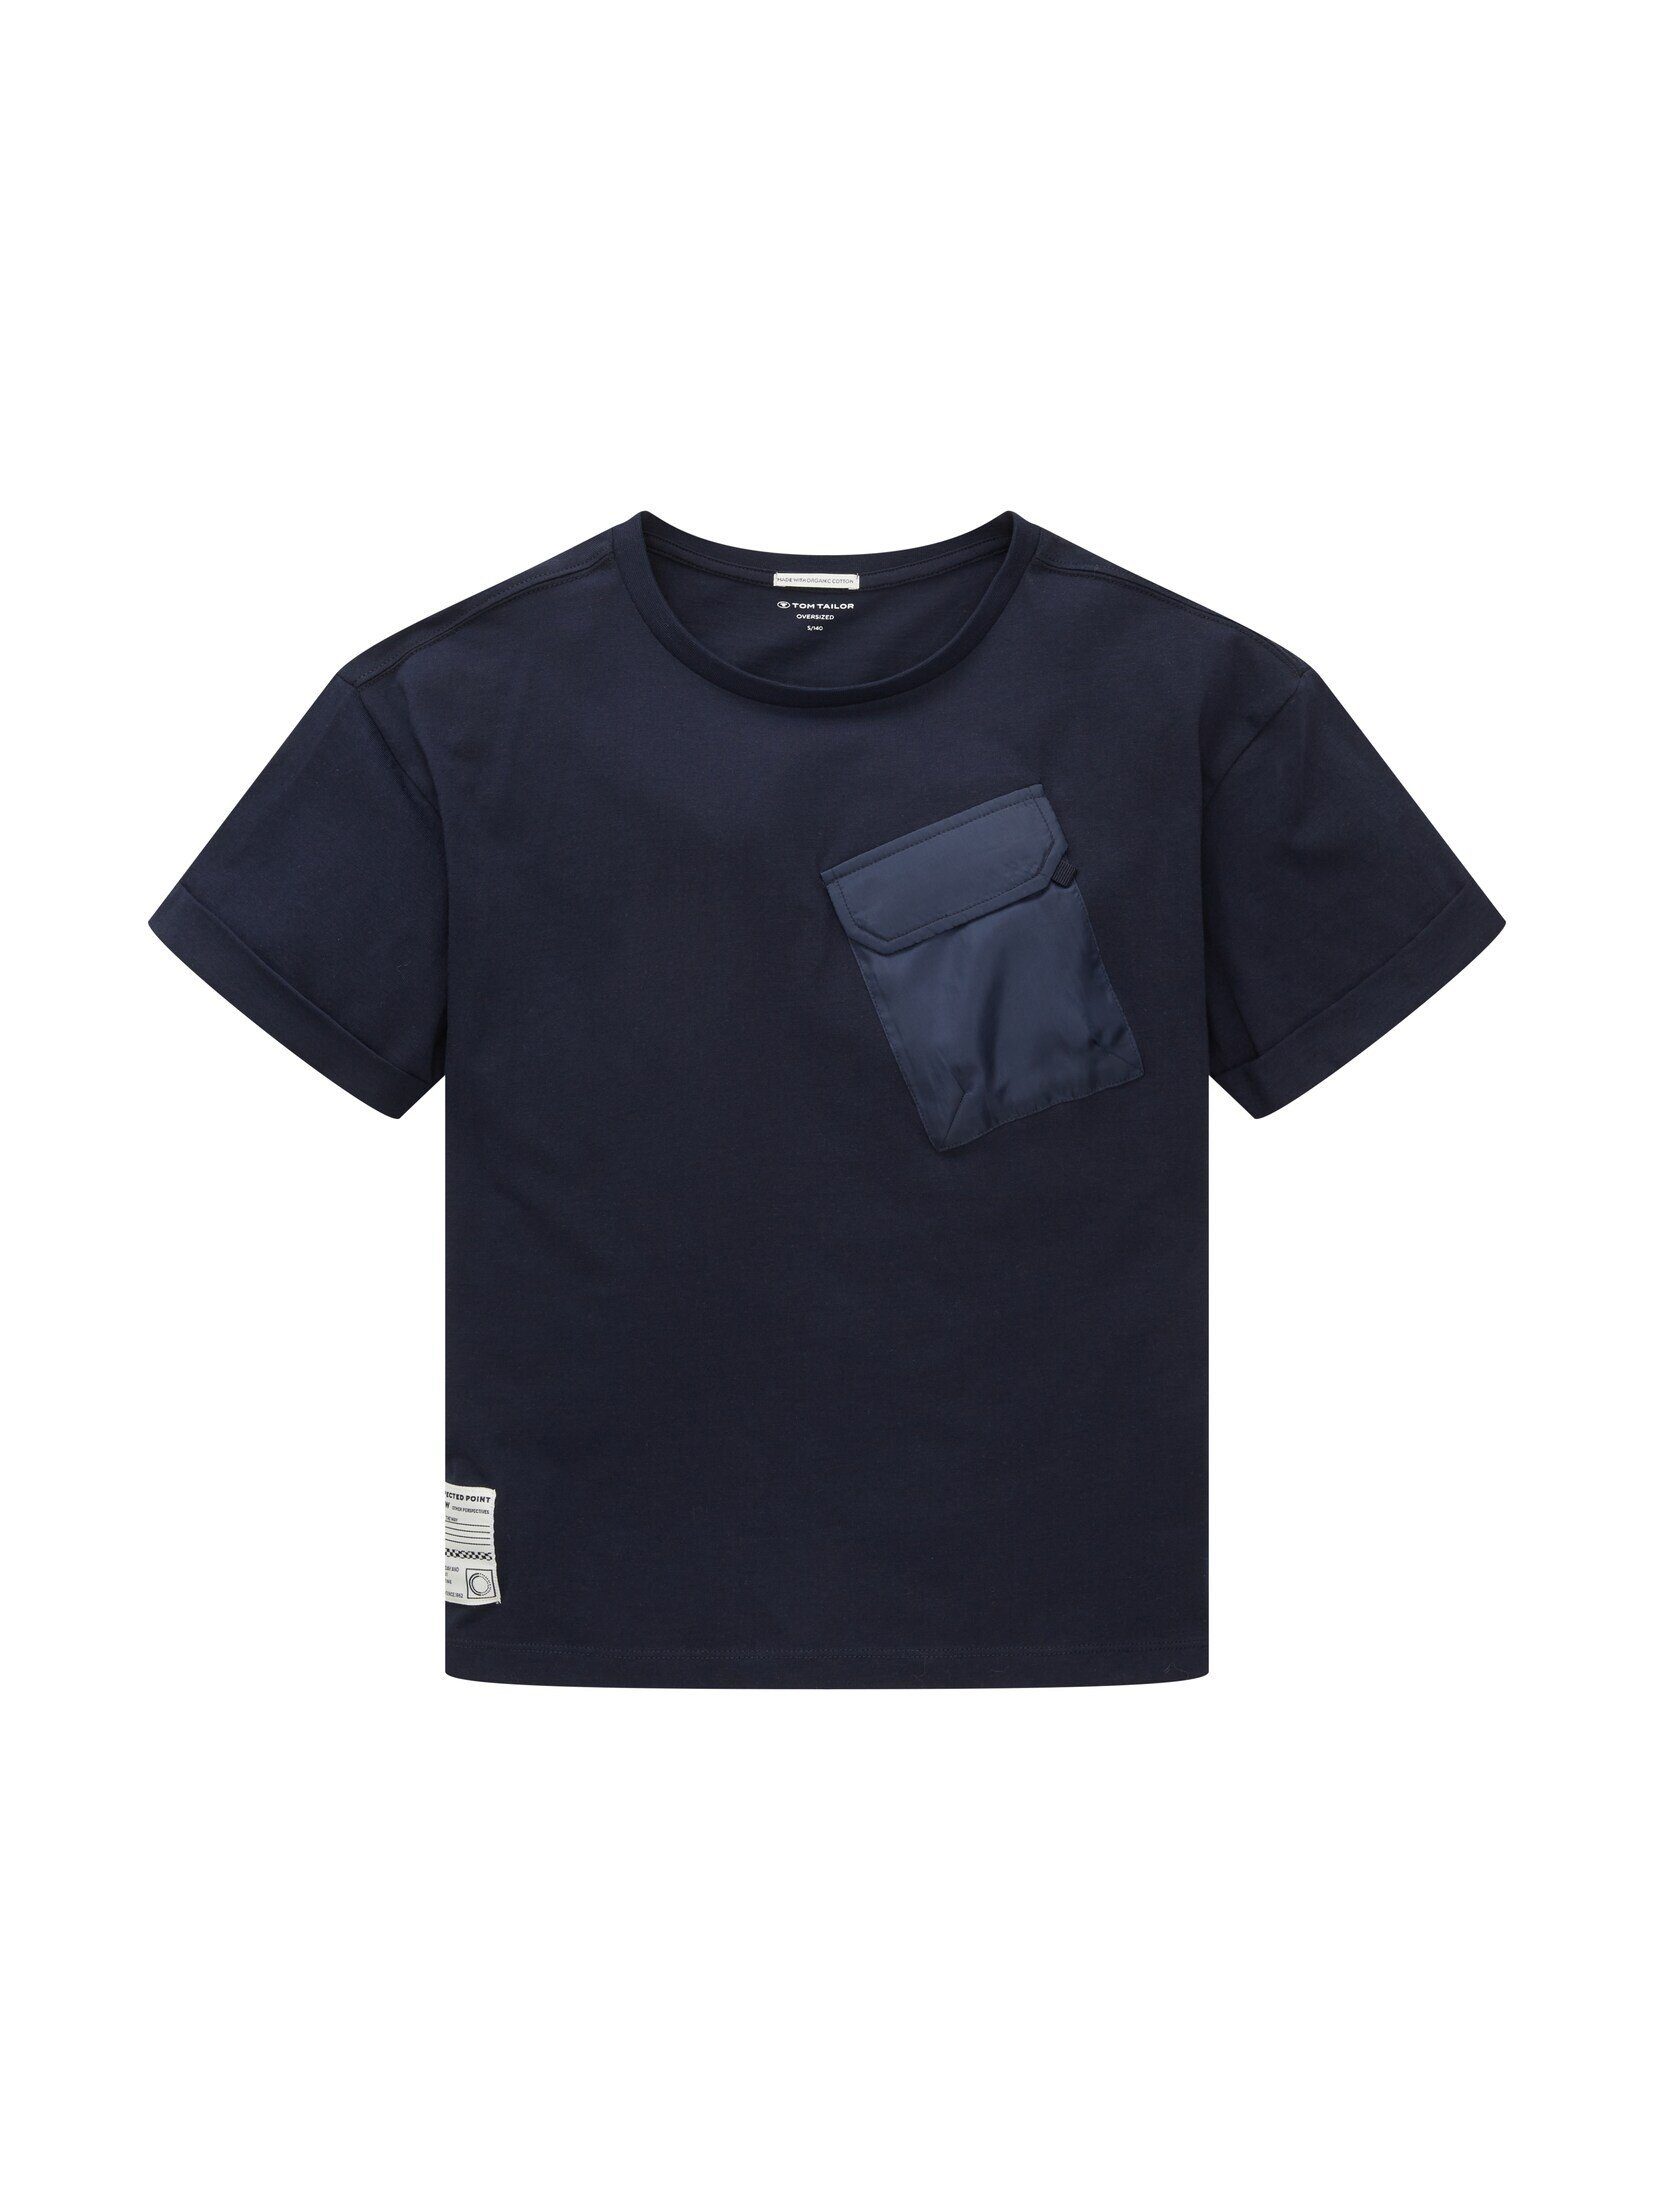 TOM TAILOR T-Shirt T-Shirt mit Brusttasche sky captain blue